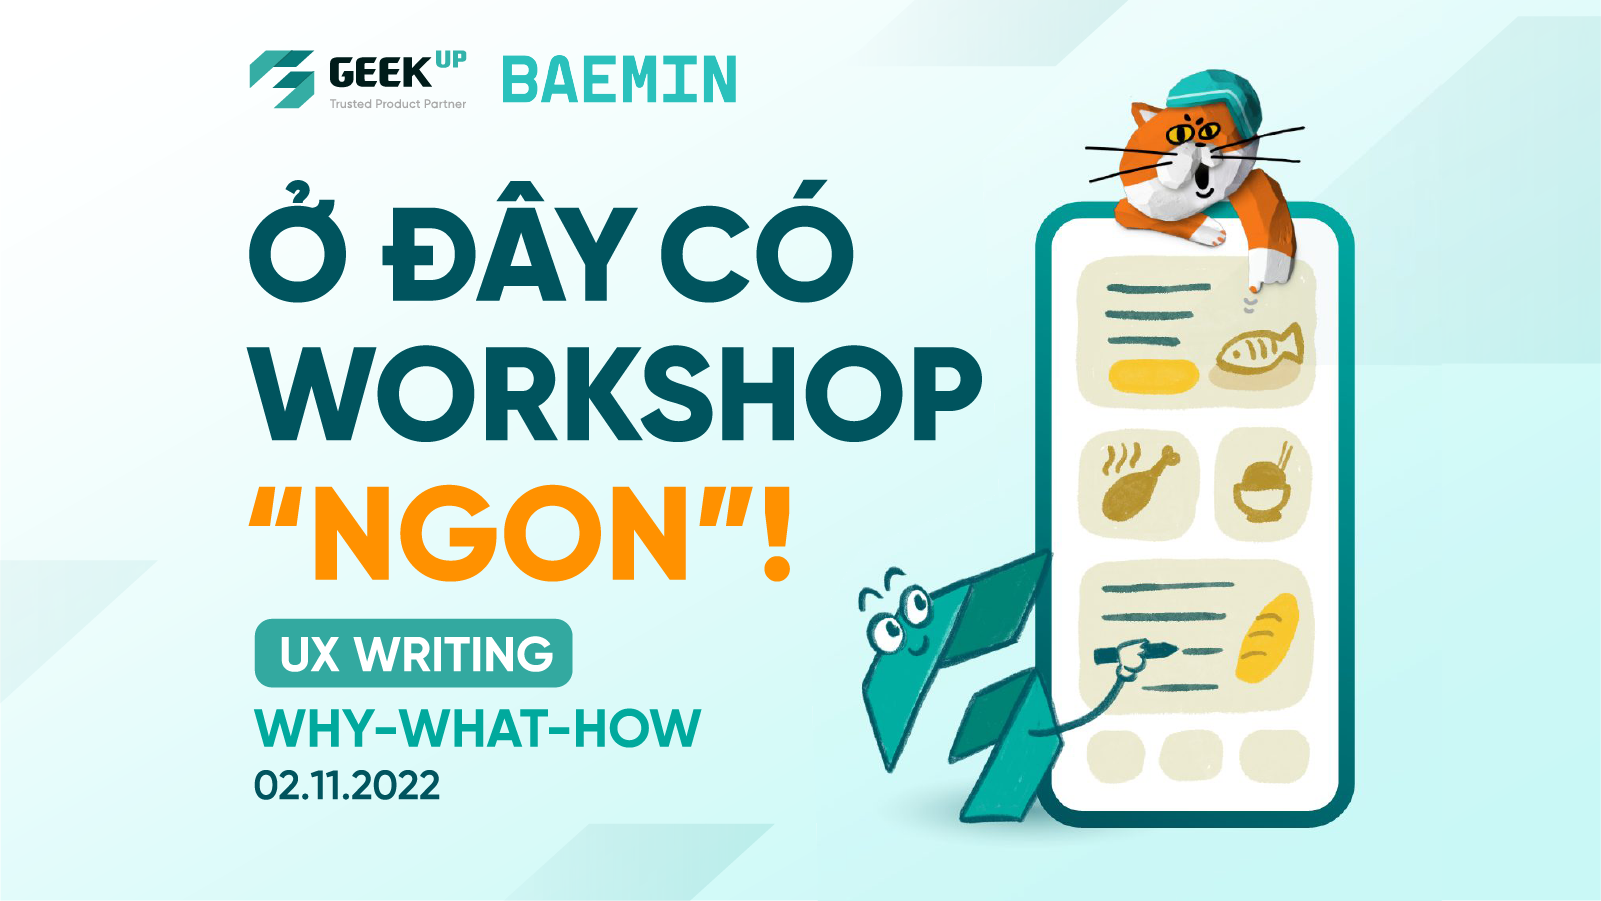 GEEK Up kết hợp BEAMIN tổ chức Workshop “UX Writing: Why - What - How”